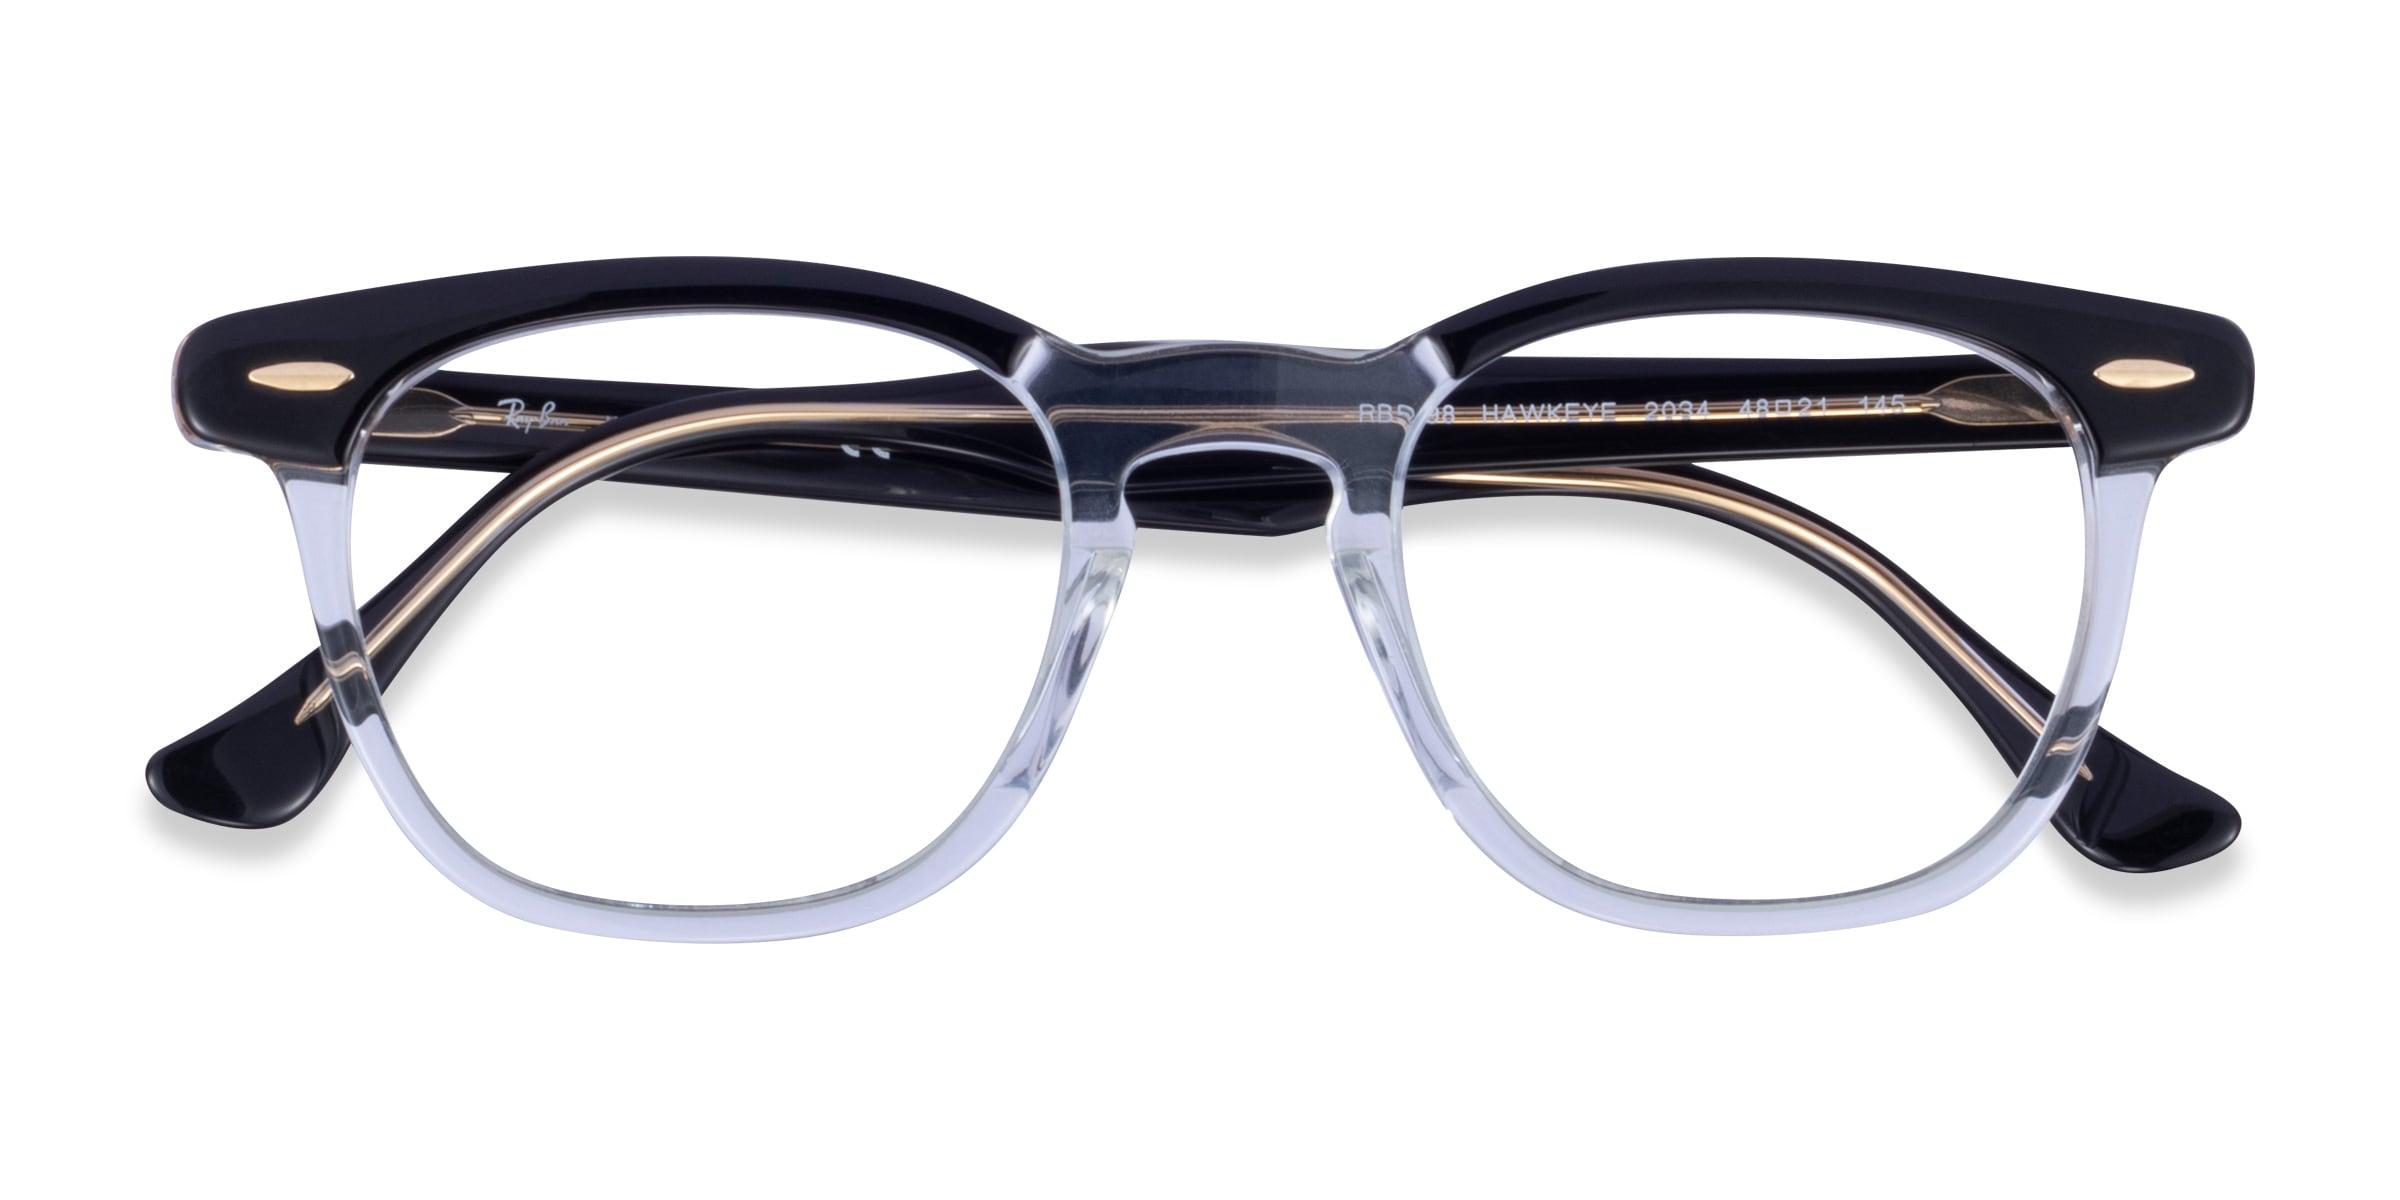 Ray-Ban RB5398 Hawkeye - Square Black Clear Frame Eyeglasses